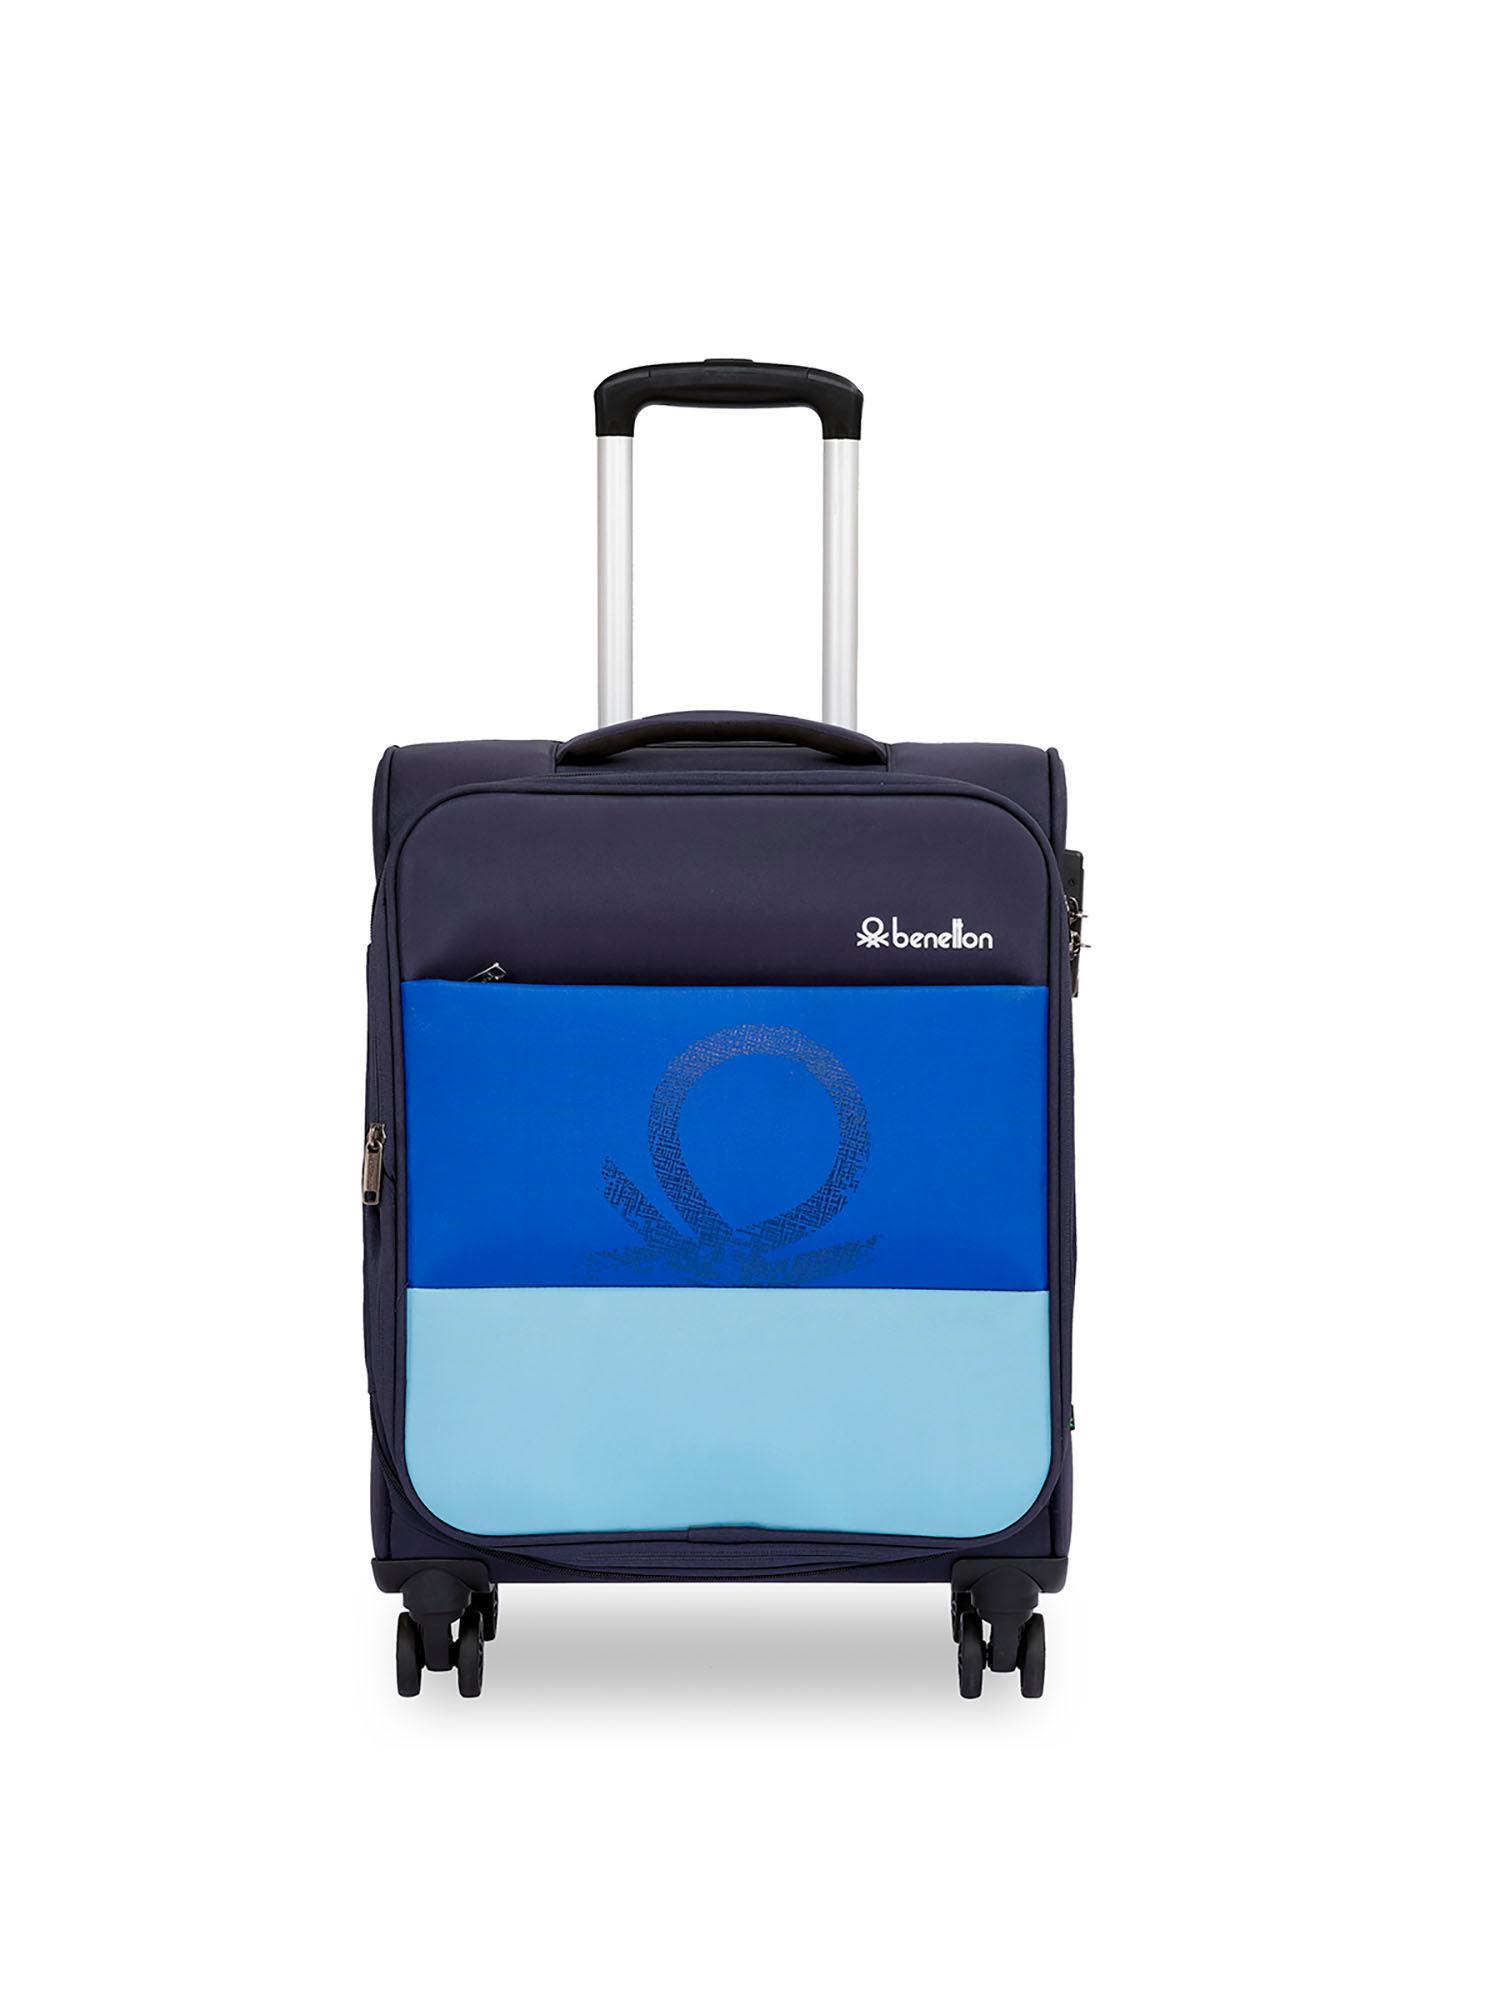 archimedes unisex soft luggage navy blue,teal 58 cm trolley bag